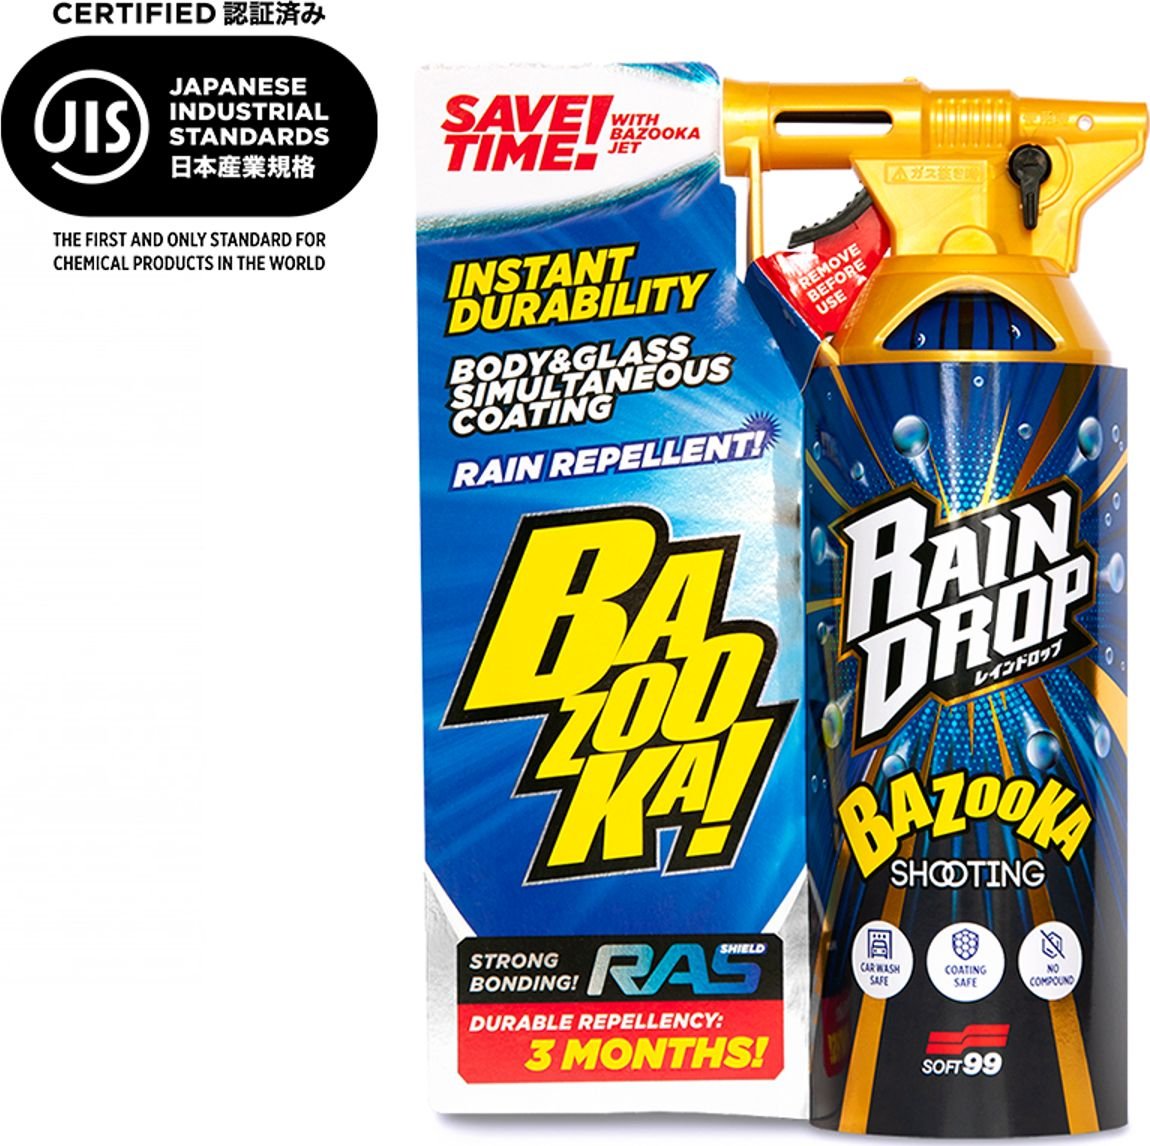 Soft99 SOFT99 Rain Drop Bazooka Spray acoperire 300ml universal